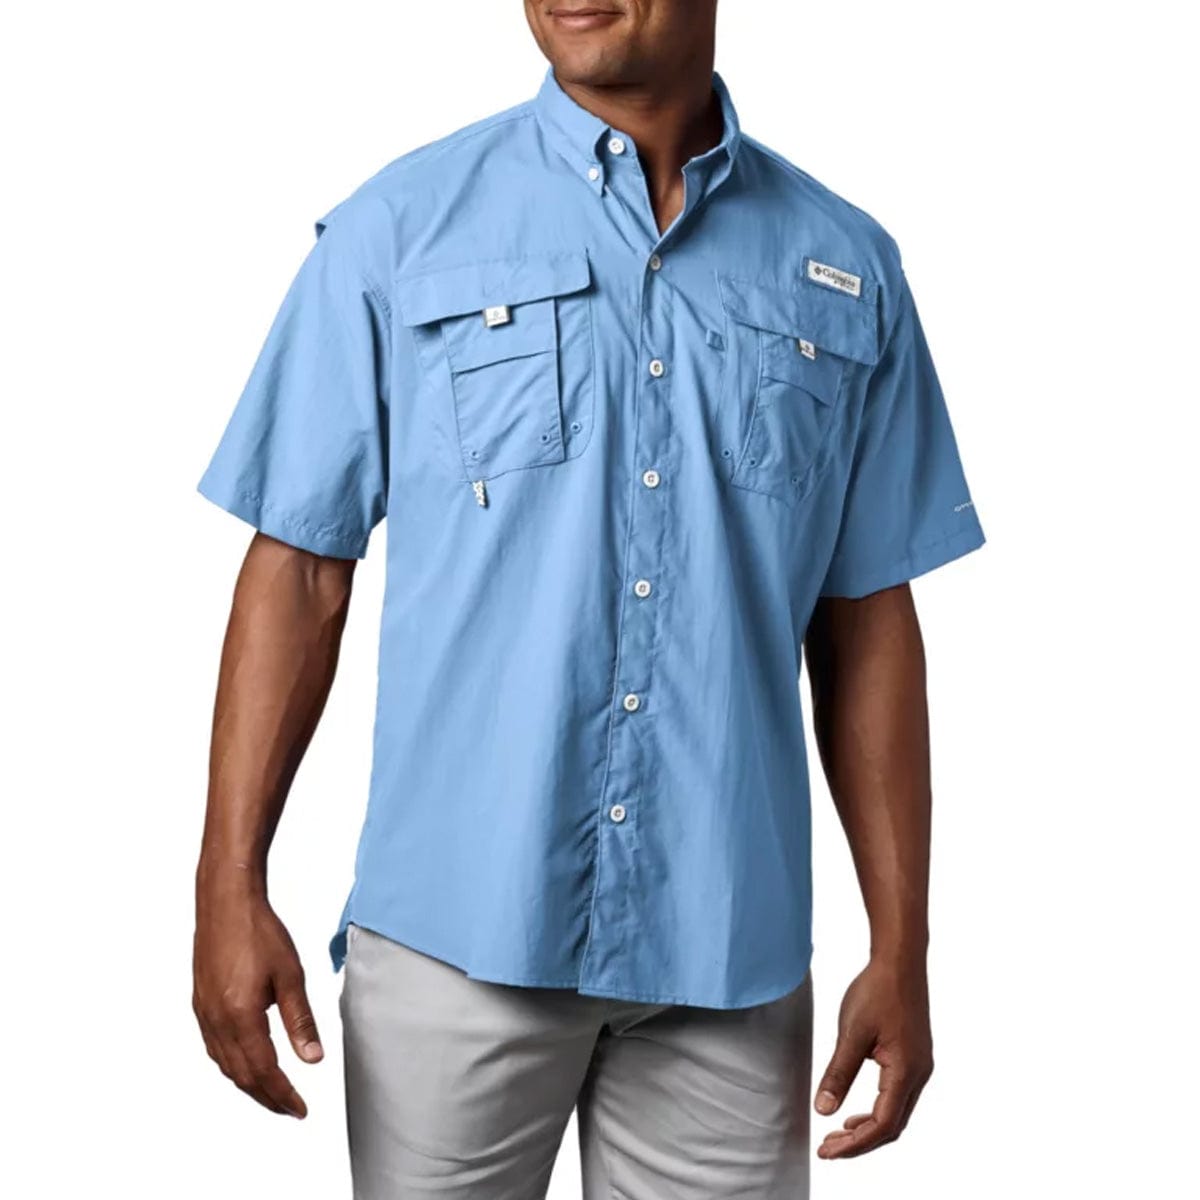 Columbia PFG Bahama II Short-Sleeve Shirt for Men - Sail - S